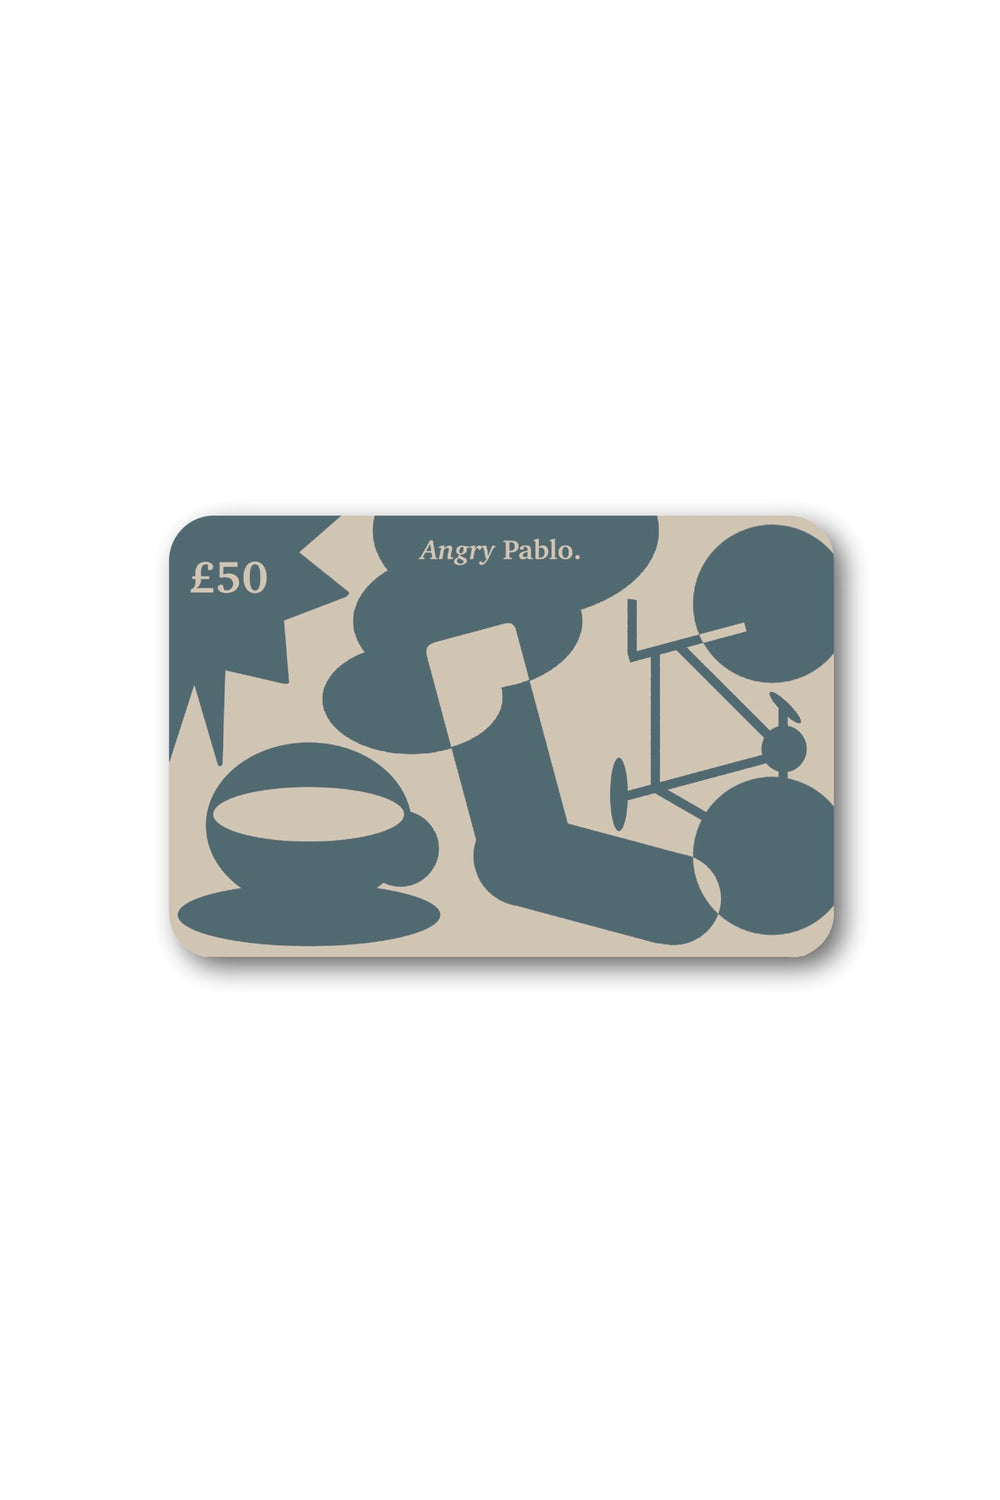 E-Gift Card // £50